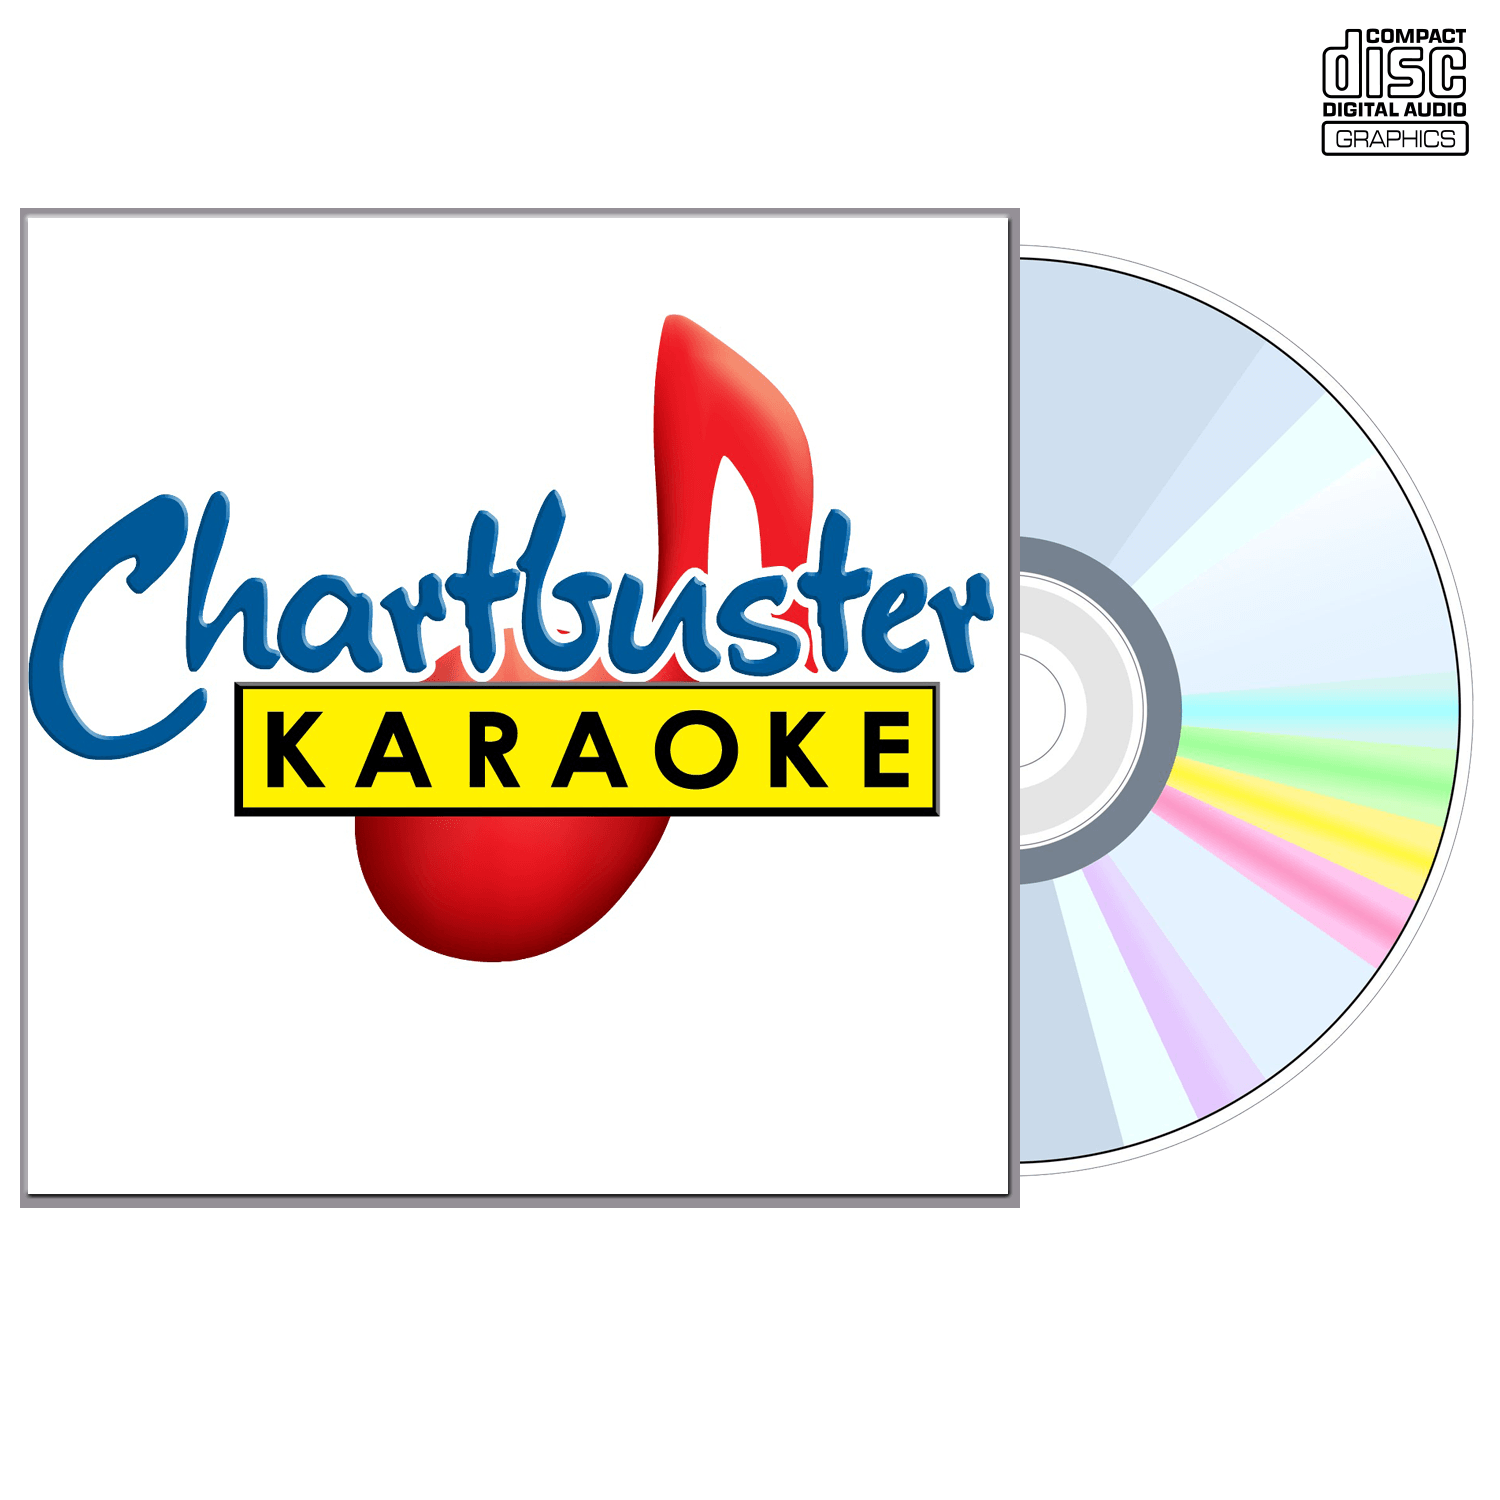 Sounds Of Sixties Vol 09 - CD+G - Chartbuster Karaoke - Karaoke Home Entertainment